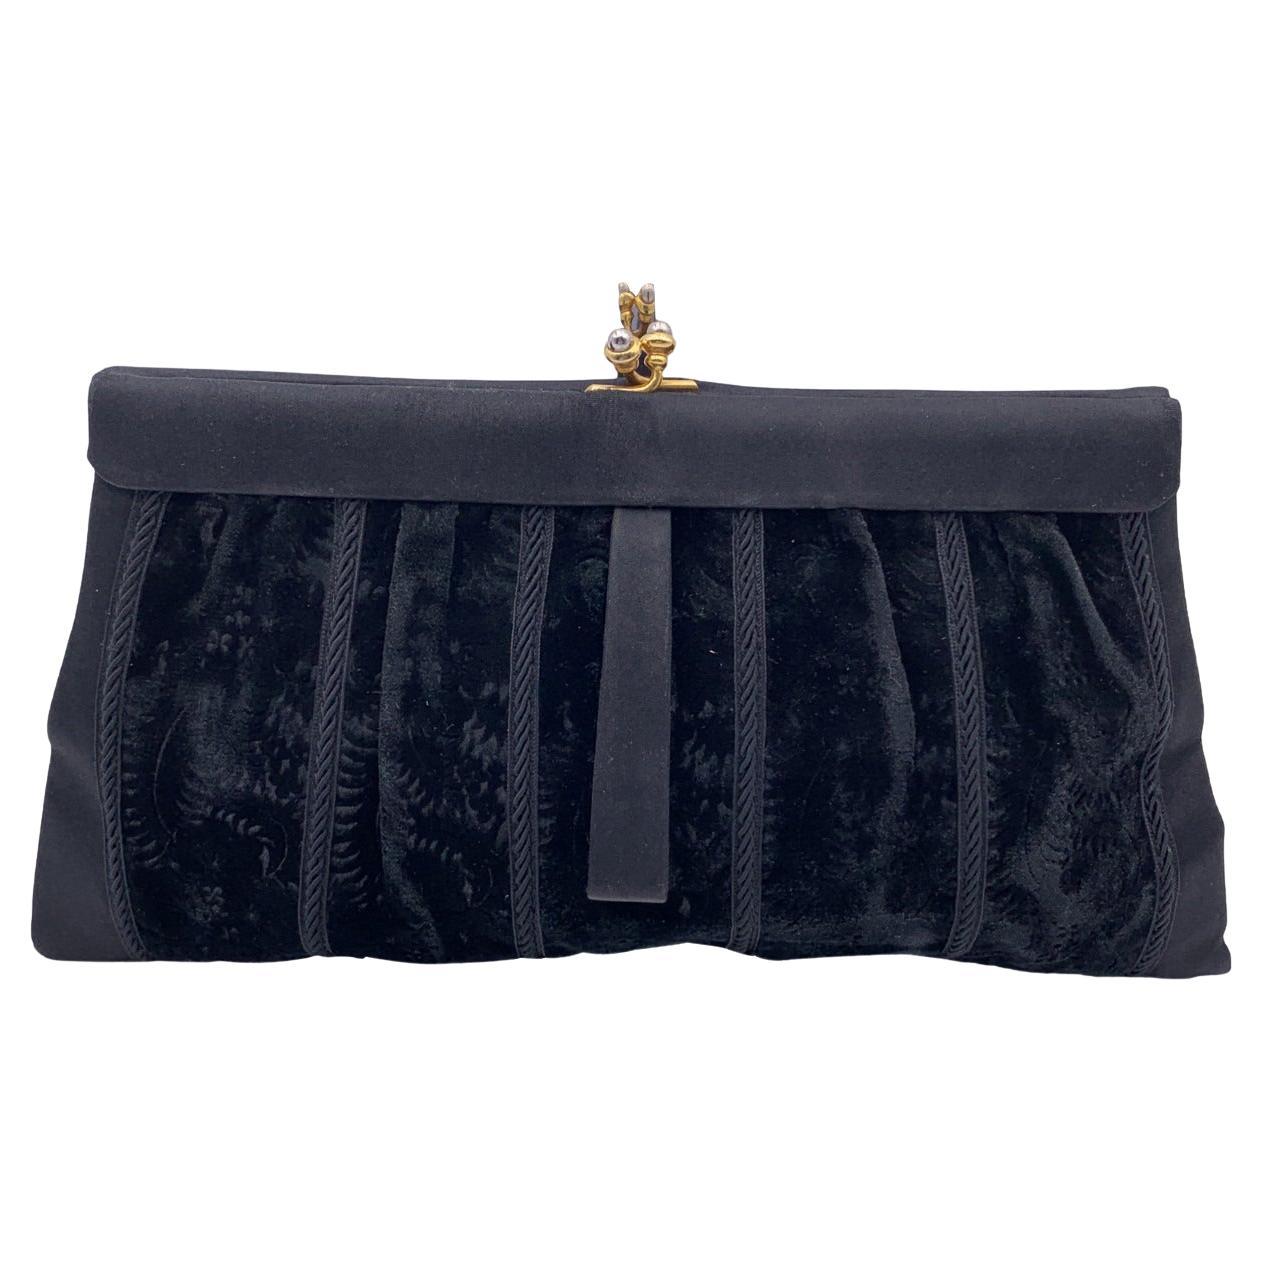 Gucci Rare Vintage Black Velvet Satin Evening Bag Clutch Handbag